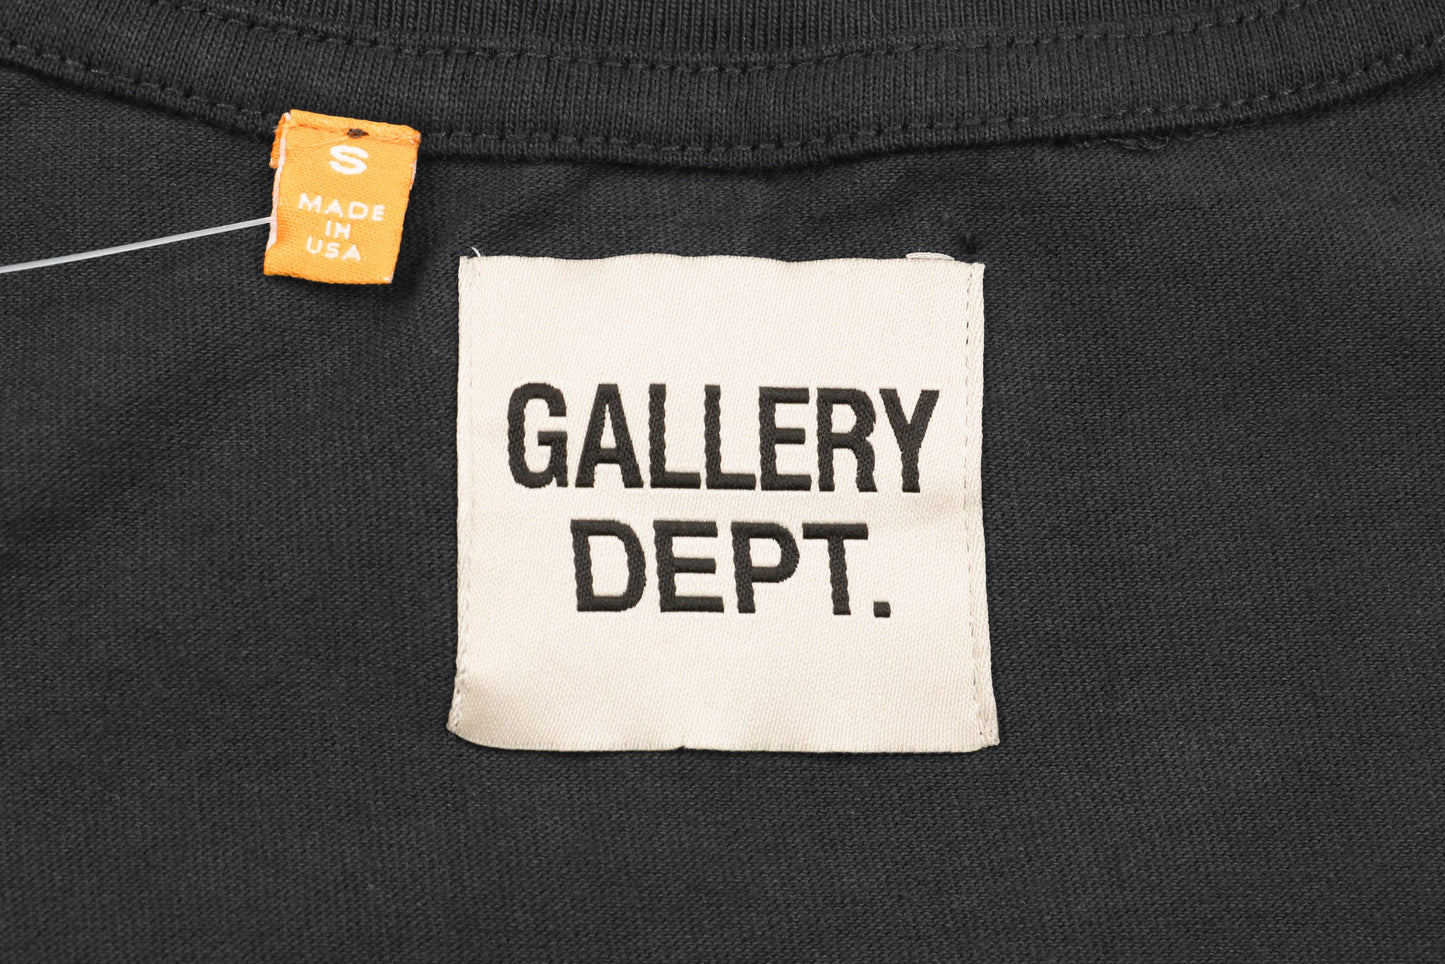 Gallery Dept Souvenir Black T-Shirt